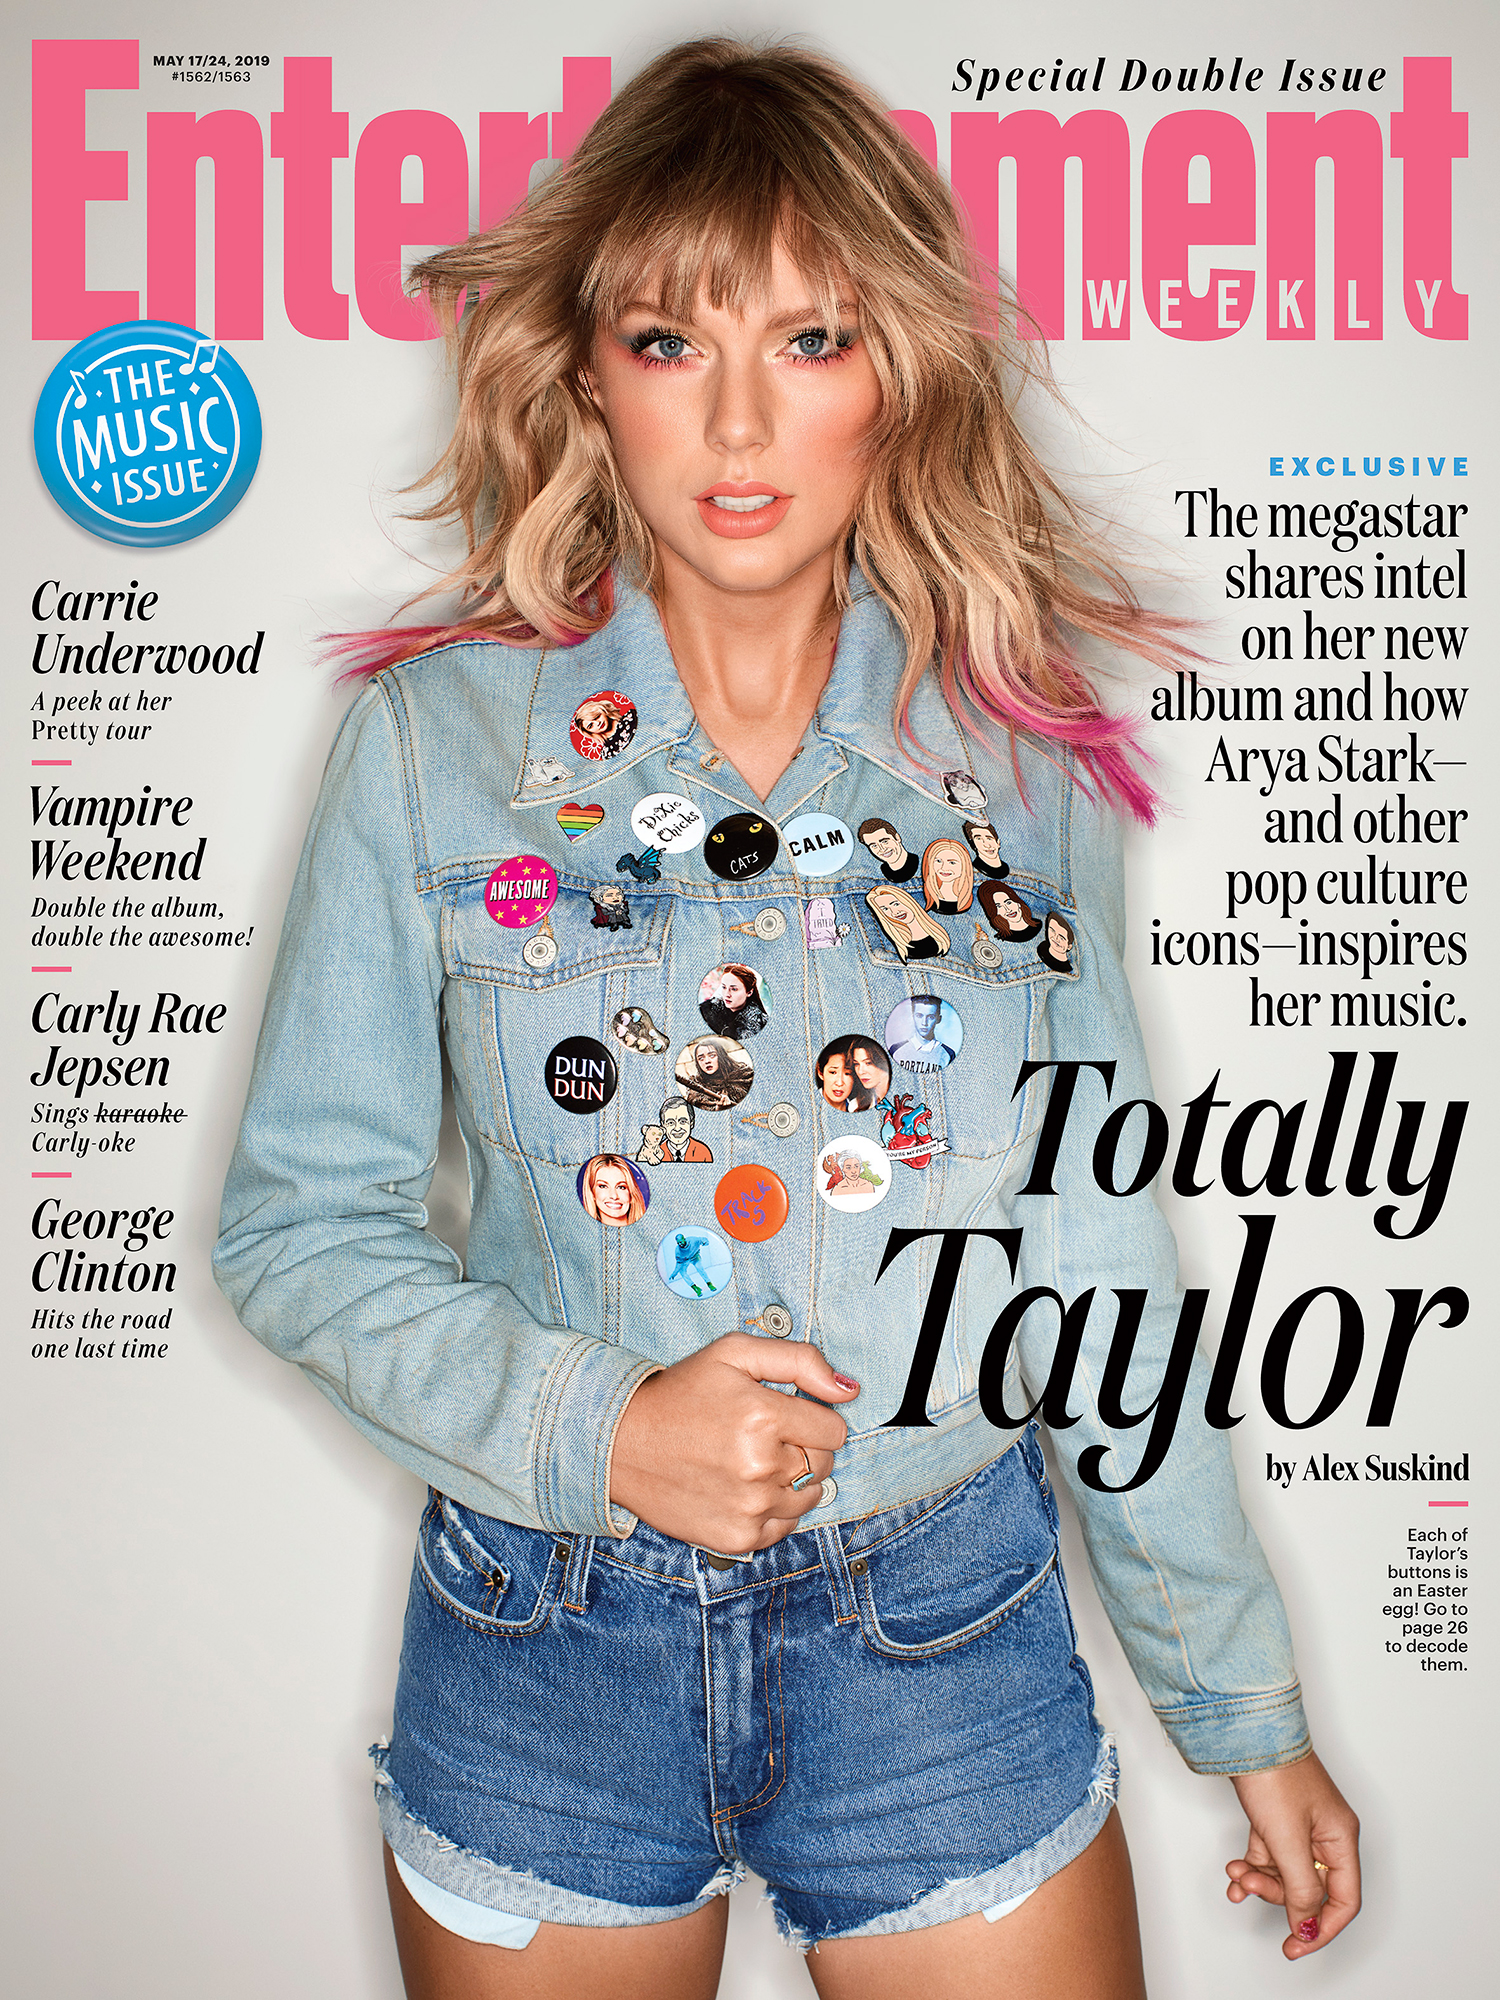 Taylor Swift Pin Button - Gorgeous